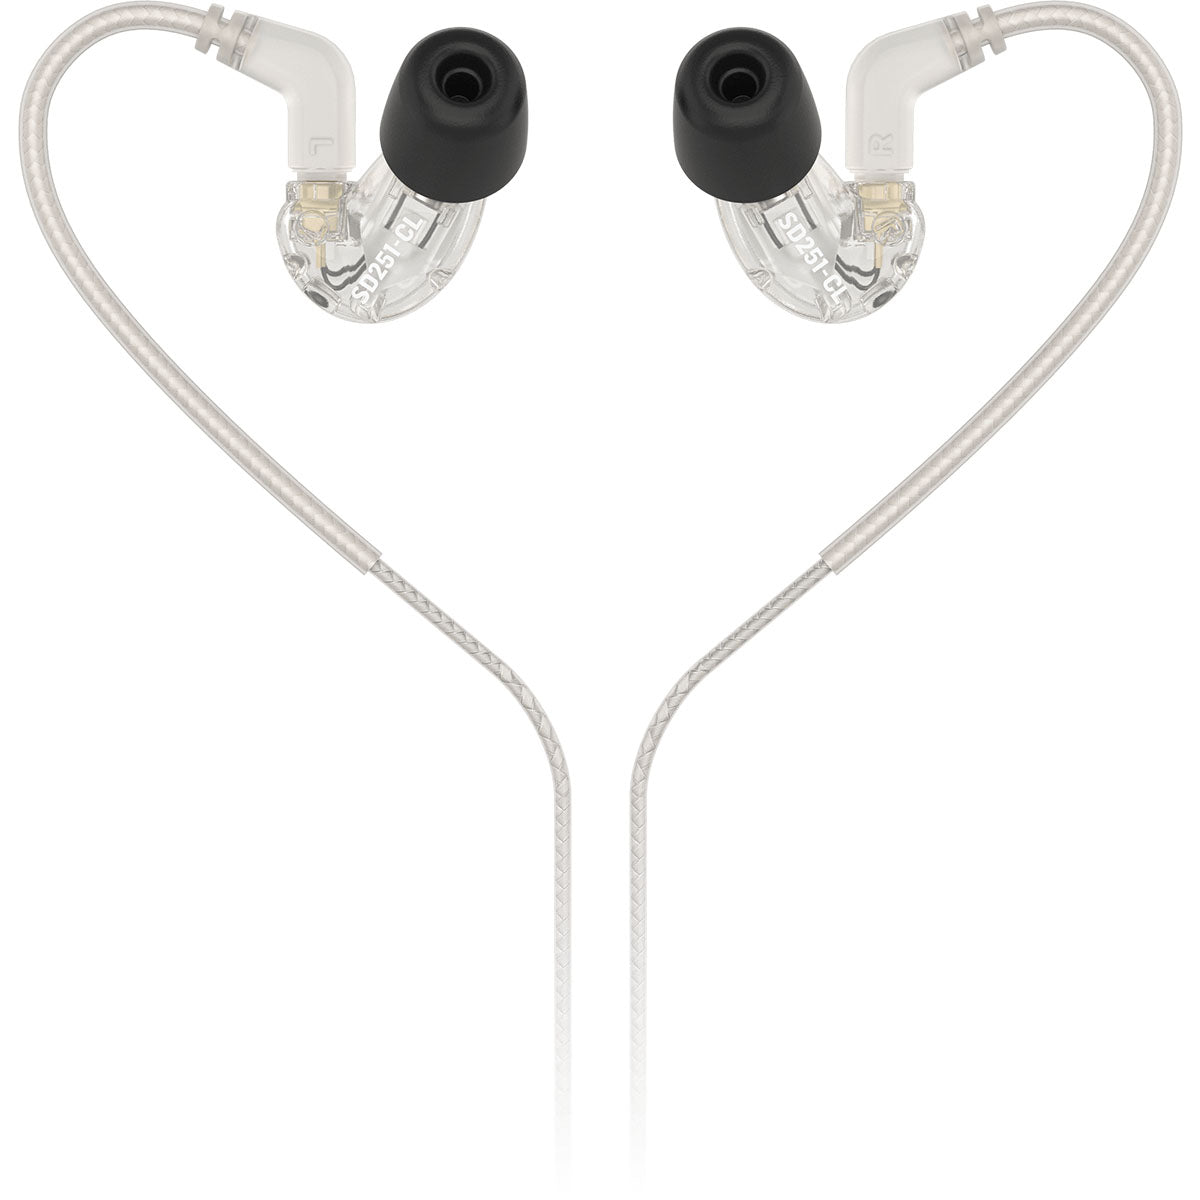 Behringer SD251-CL Clear Studio Monitoring Earphones In-Ear Monitors